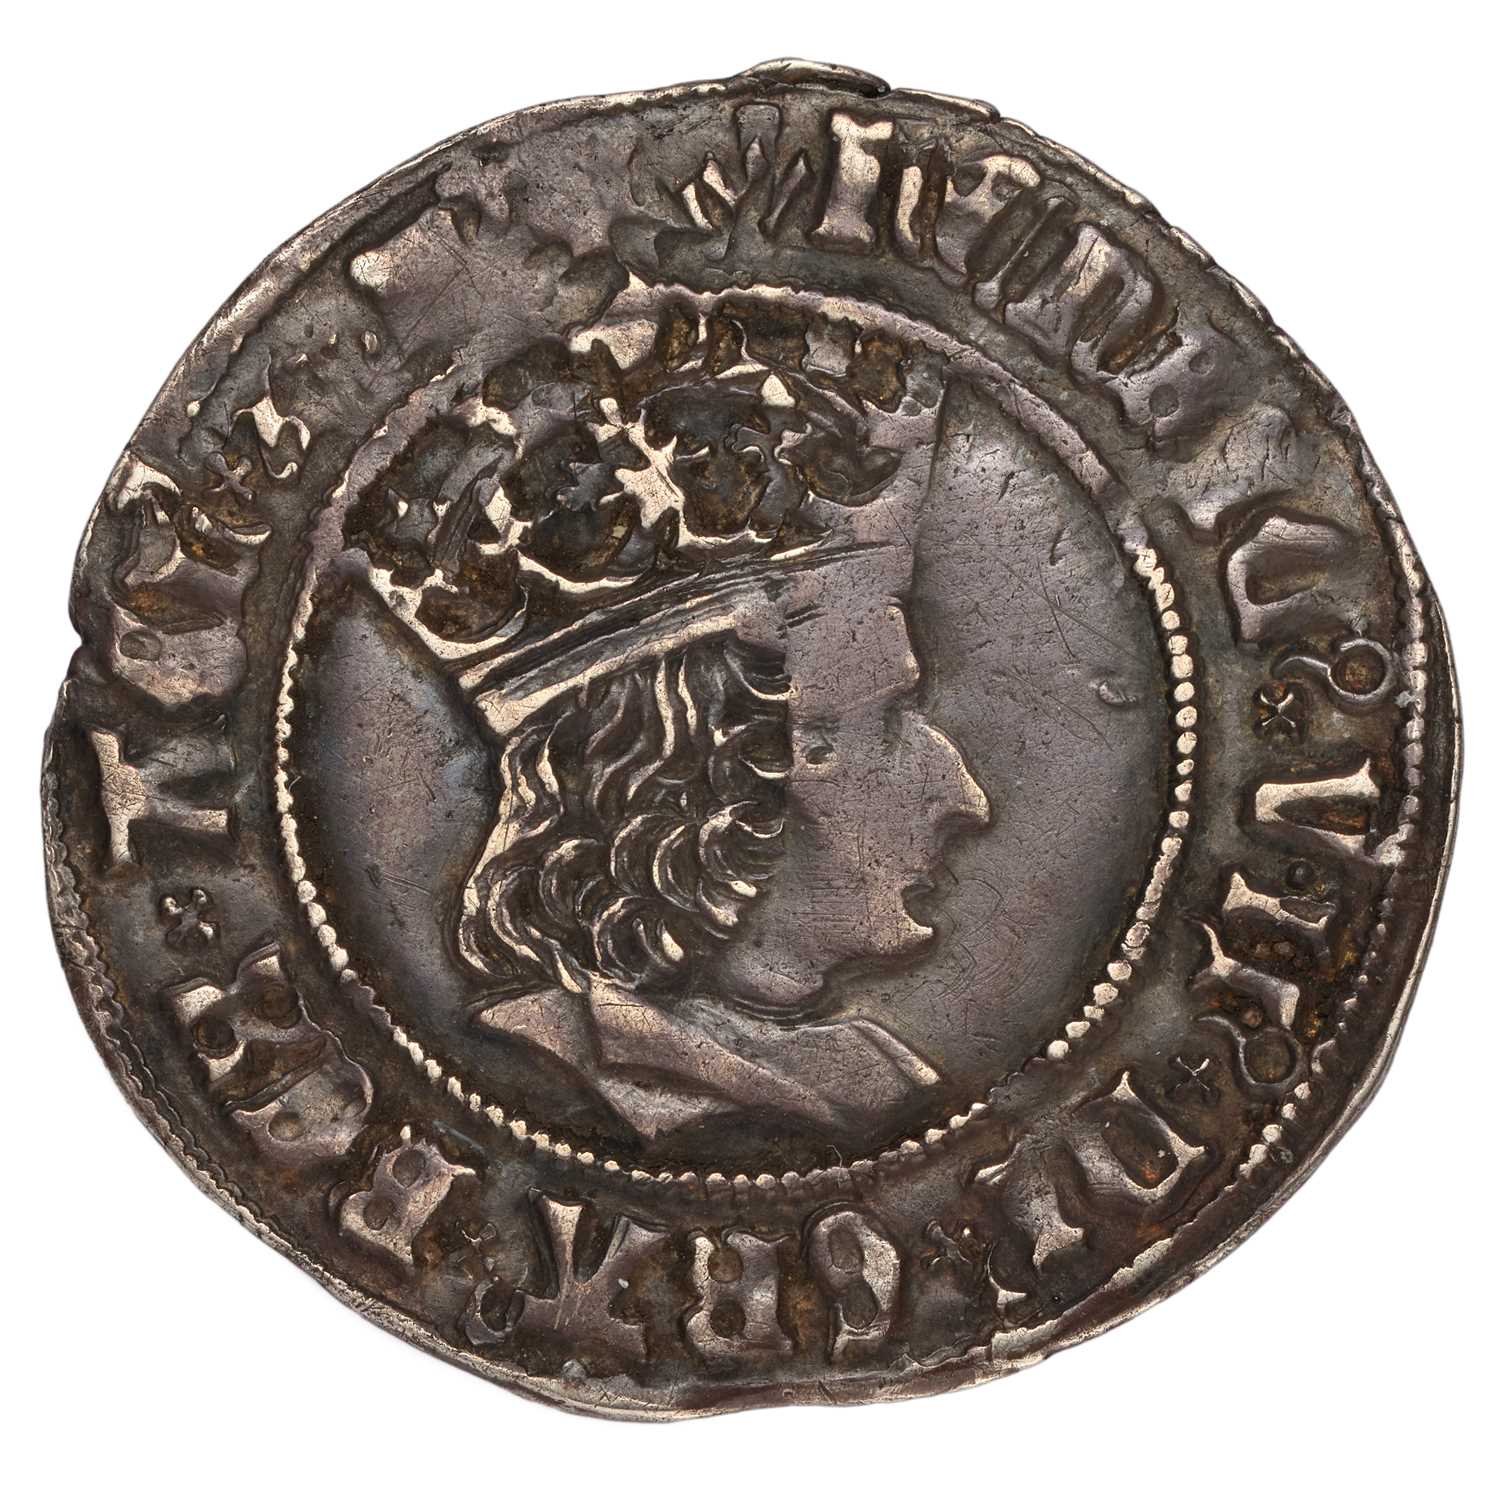 Henry VII, Groat, 3.02g, profile issue, mm. pheon, regular issue, (N.1747, S.2258), dark tone,